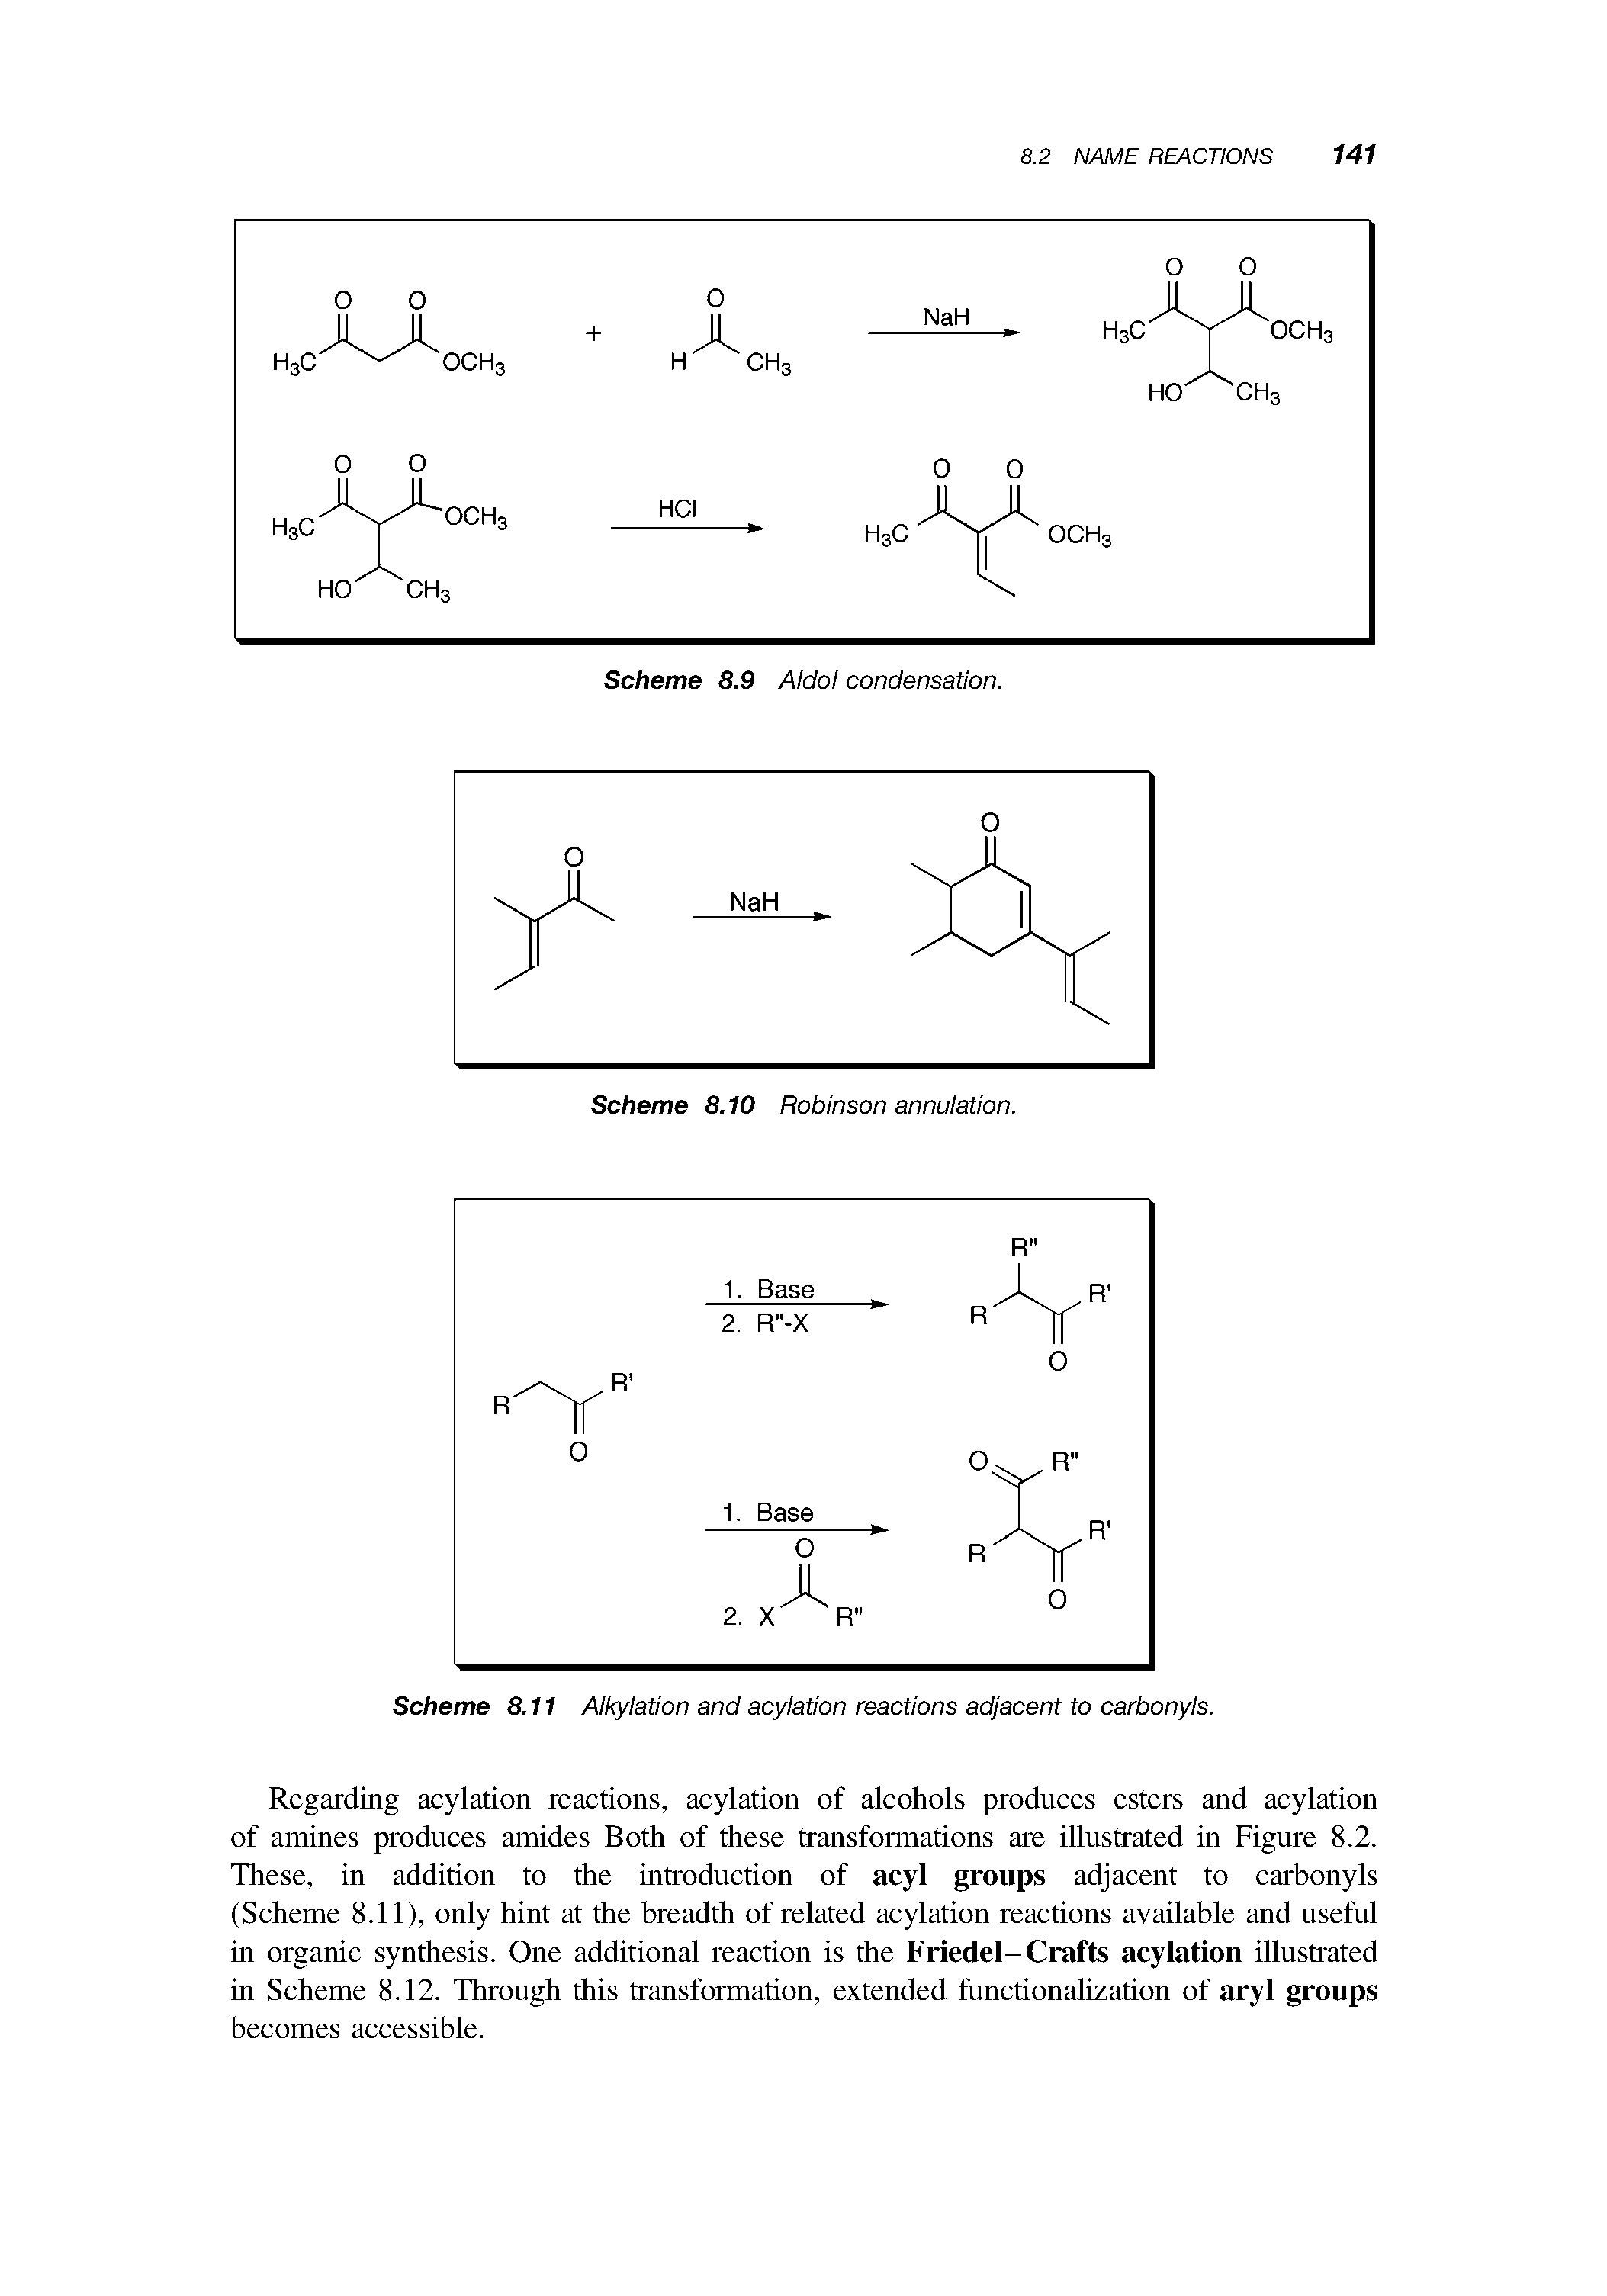 Scheme 8.11 Alkylation and acylation reactions adjacent to carbonyls.